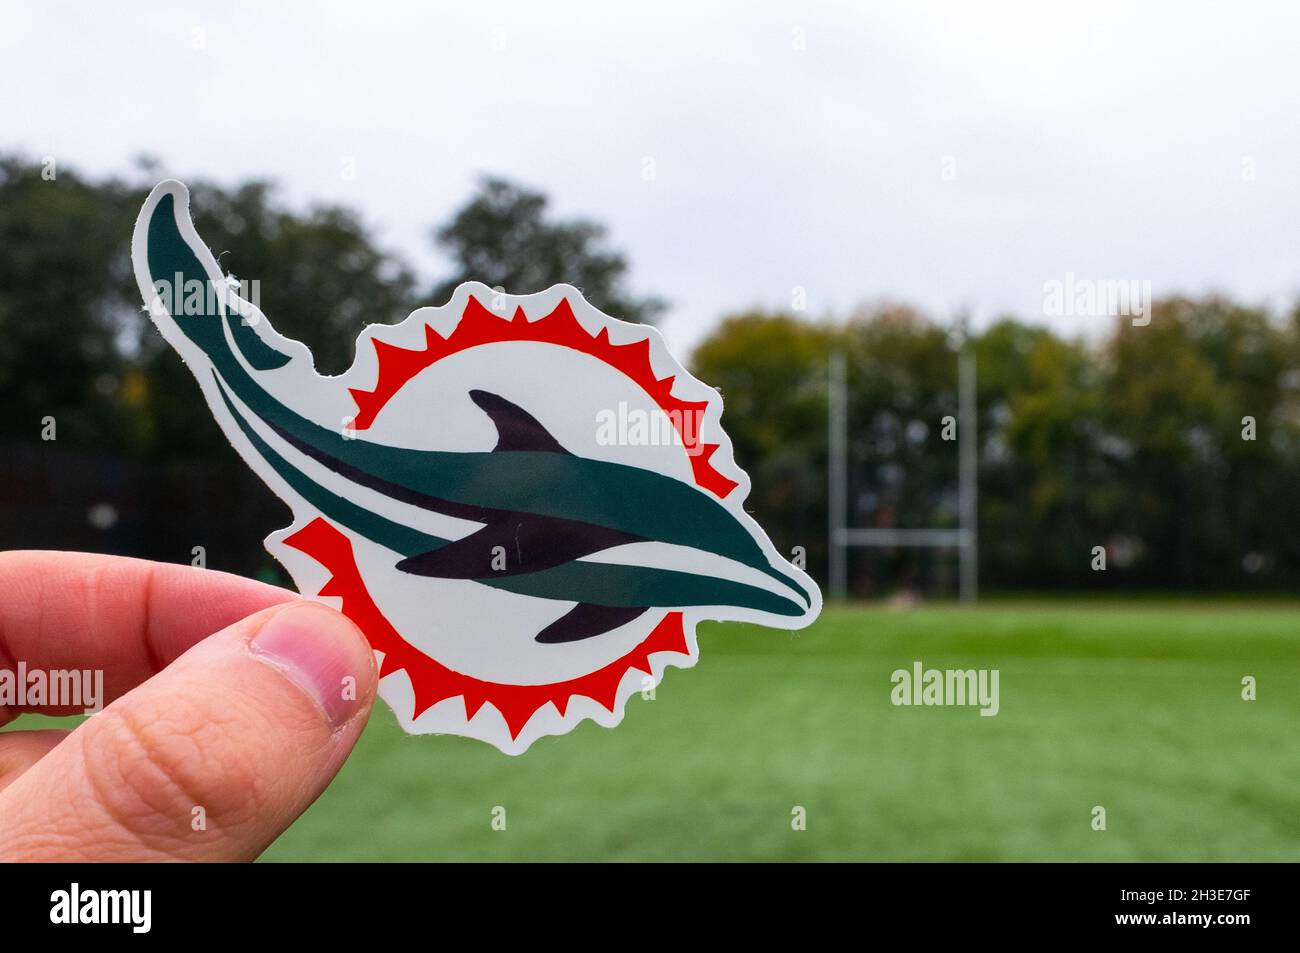 September 16, 2021, Miami, Florida. Emblem A Professional American Football Team Miami Dolphins Based in The Miami Metropolitan Area in the sports sta Stock Photo